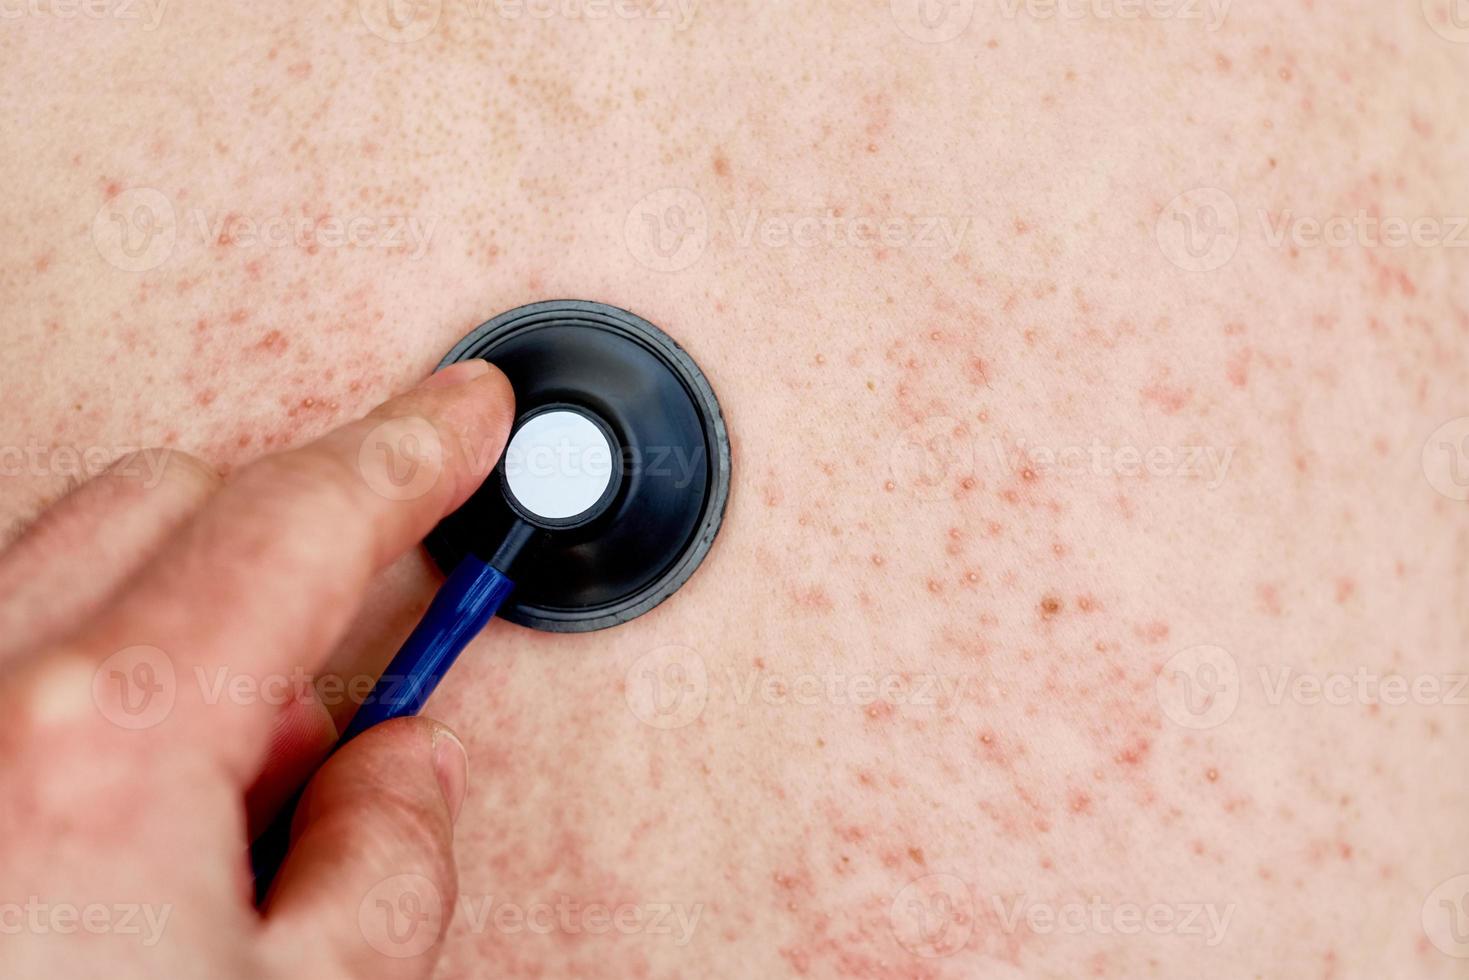 Allergic rash on skin. Woman with dermatology problem on back skin photo